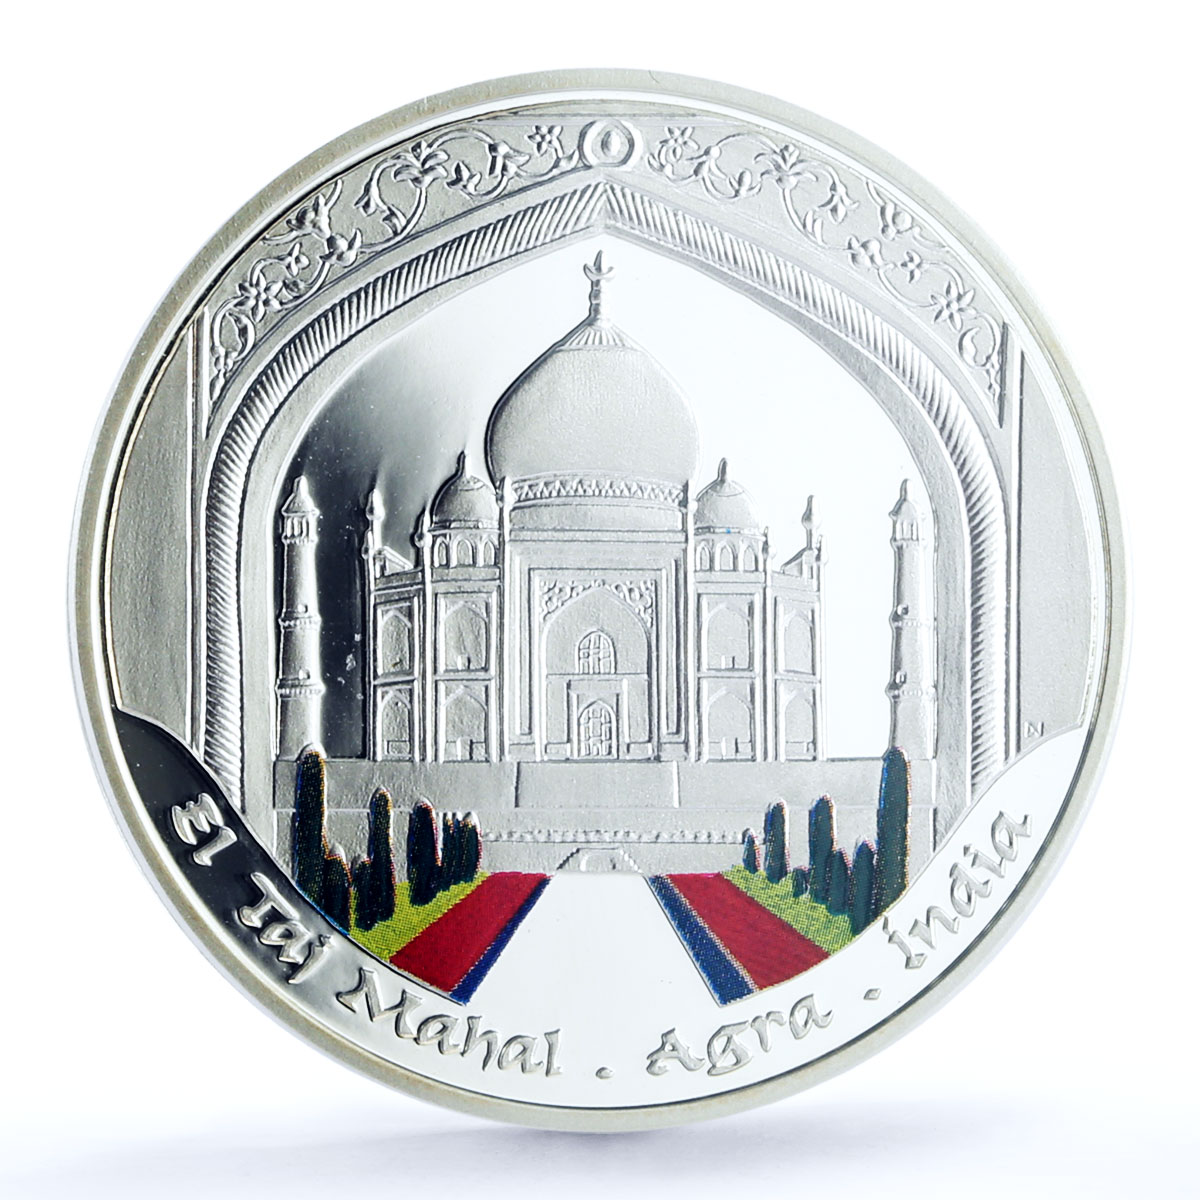 Andorra 10 diners World of Wonders Taj Mahal Palace PR69 PCGS silver coin 2009